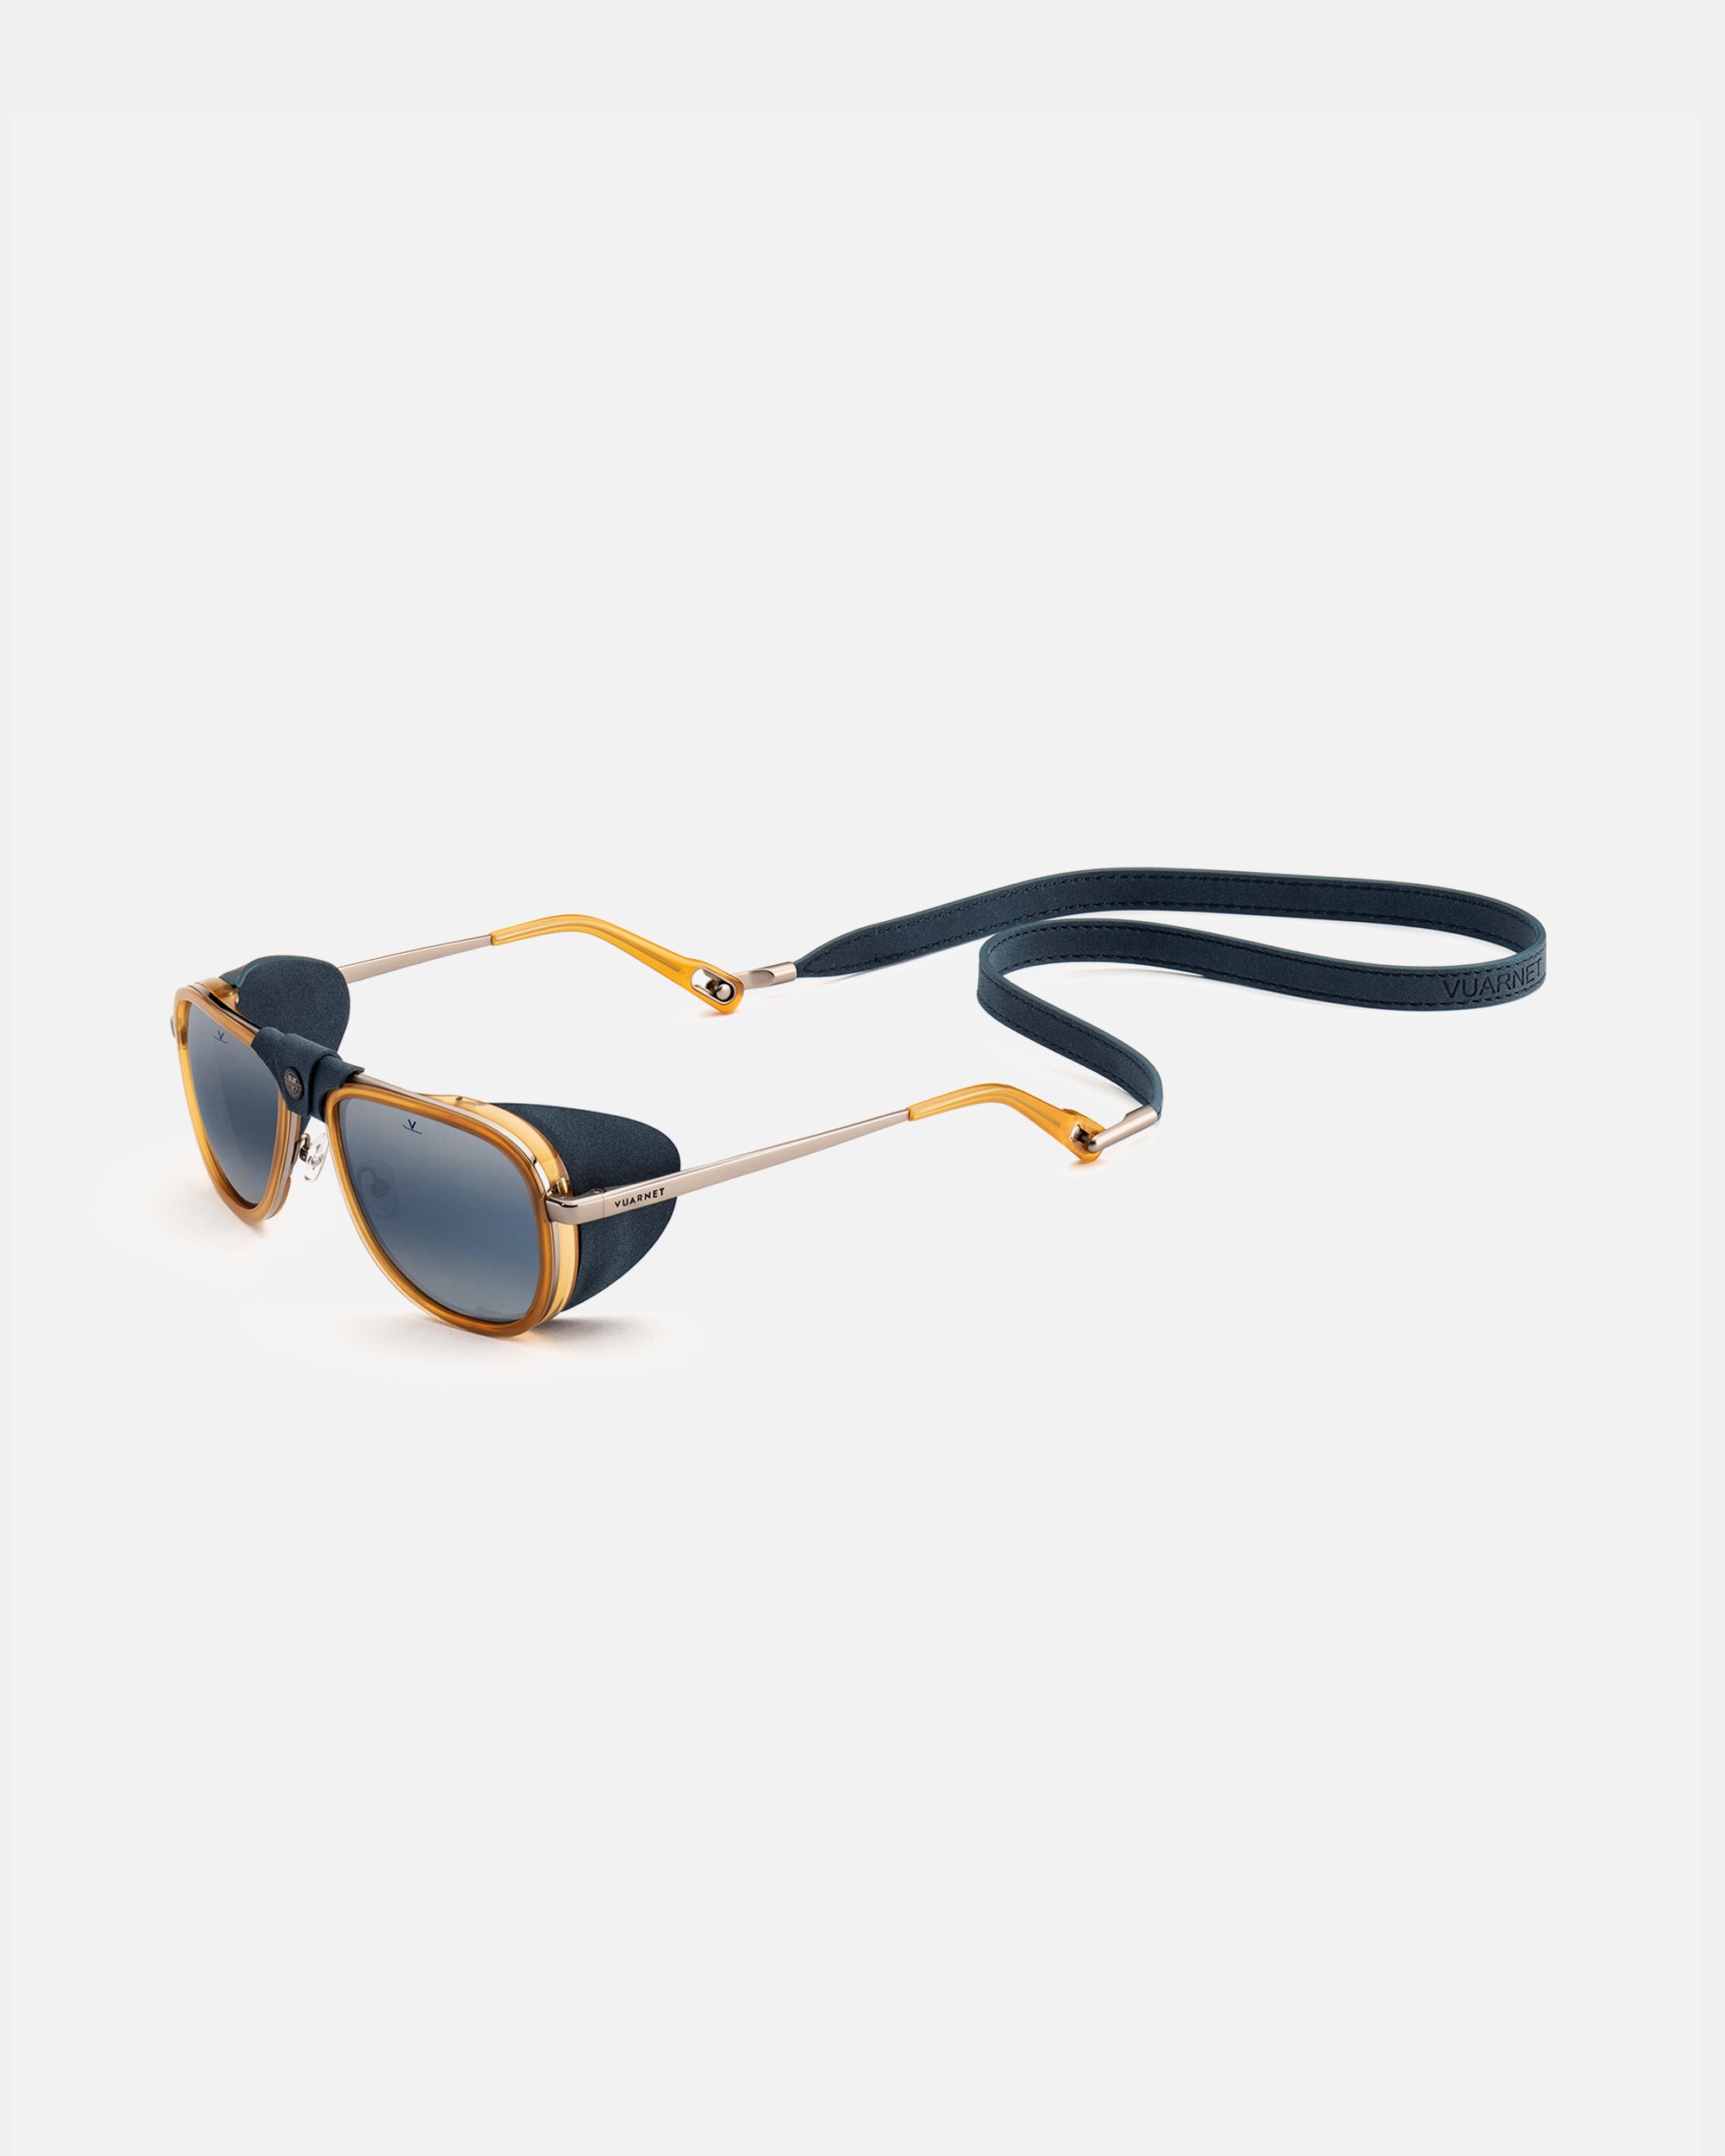 Vuarnet Sunglasses from France - Carytown Optical